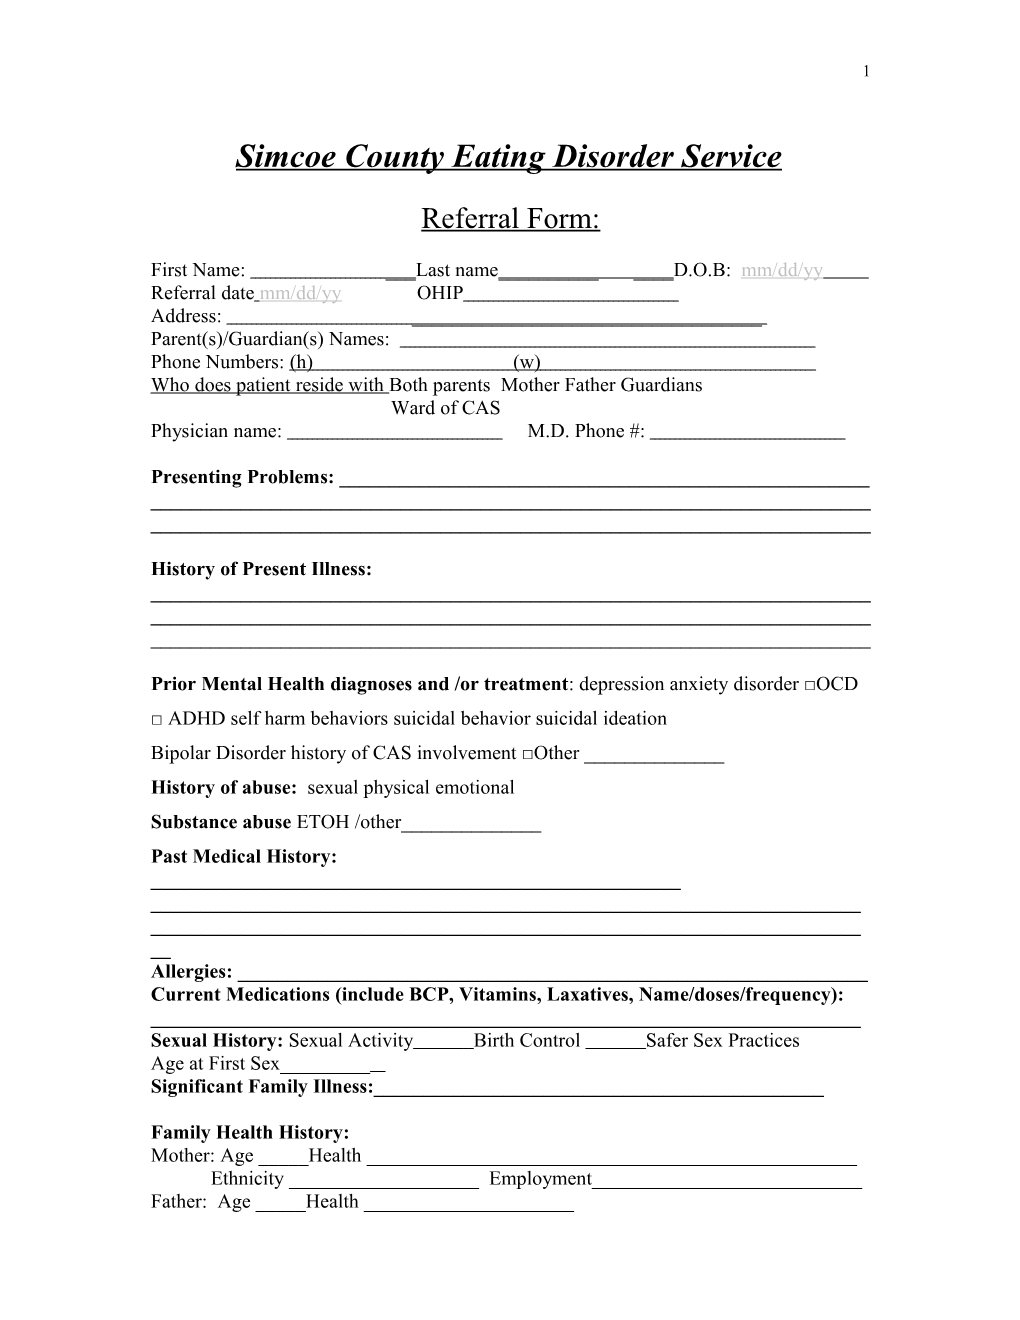 Simcoe County Eating Disorder Service